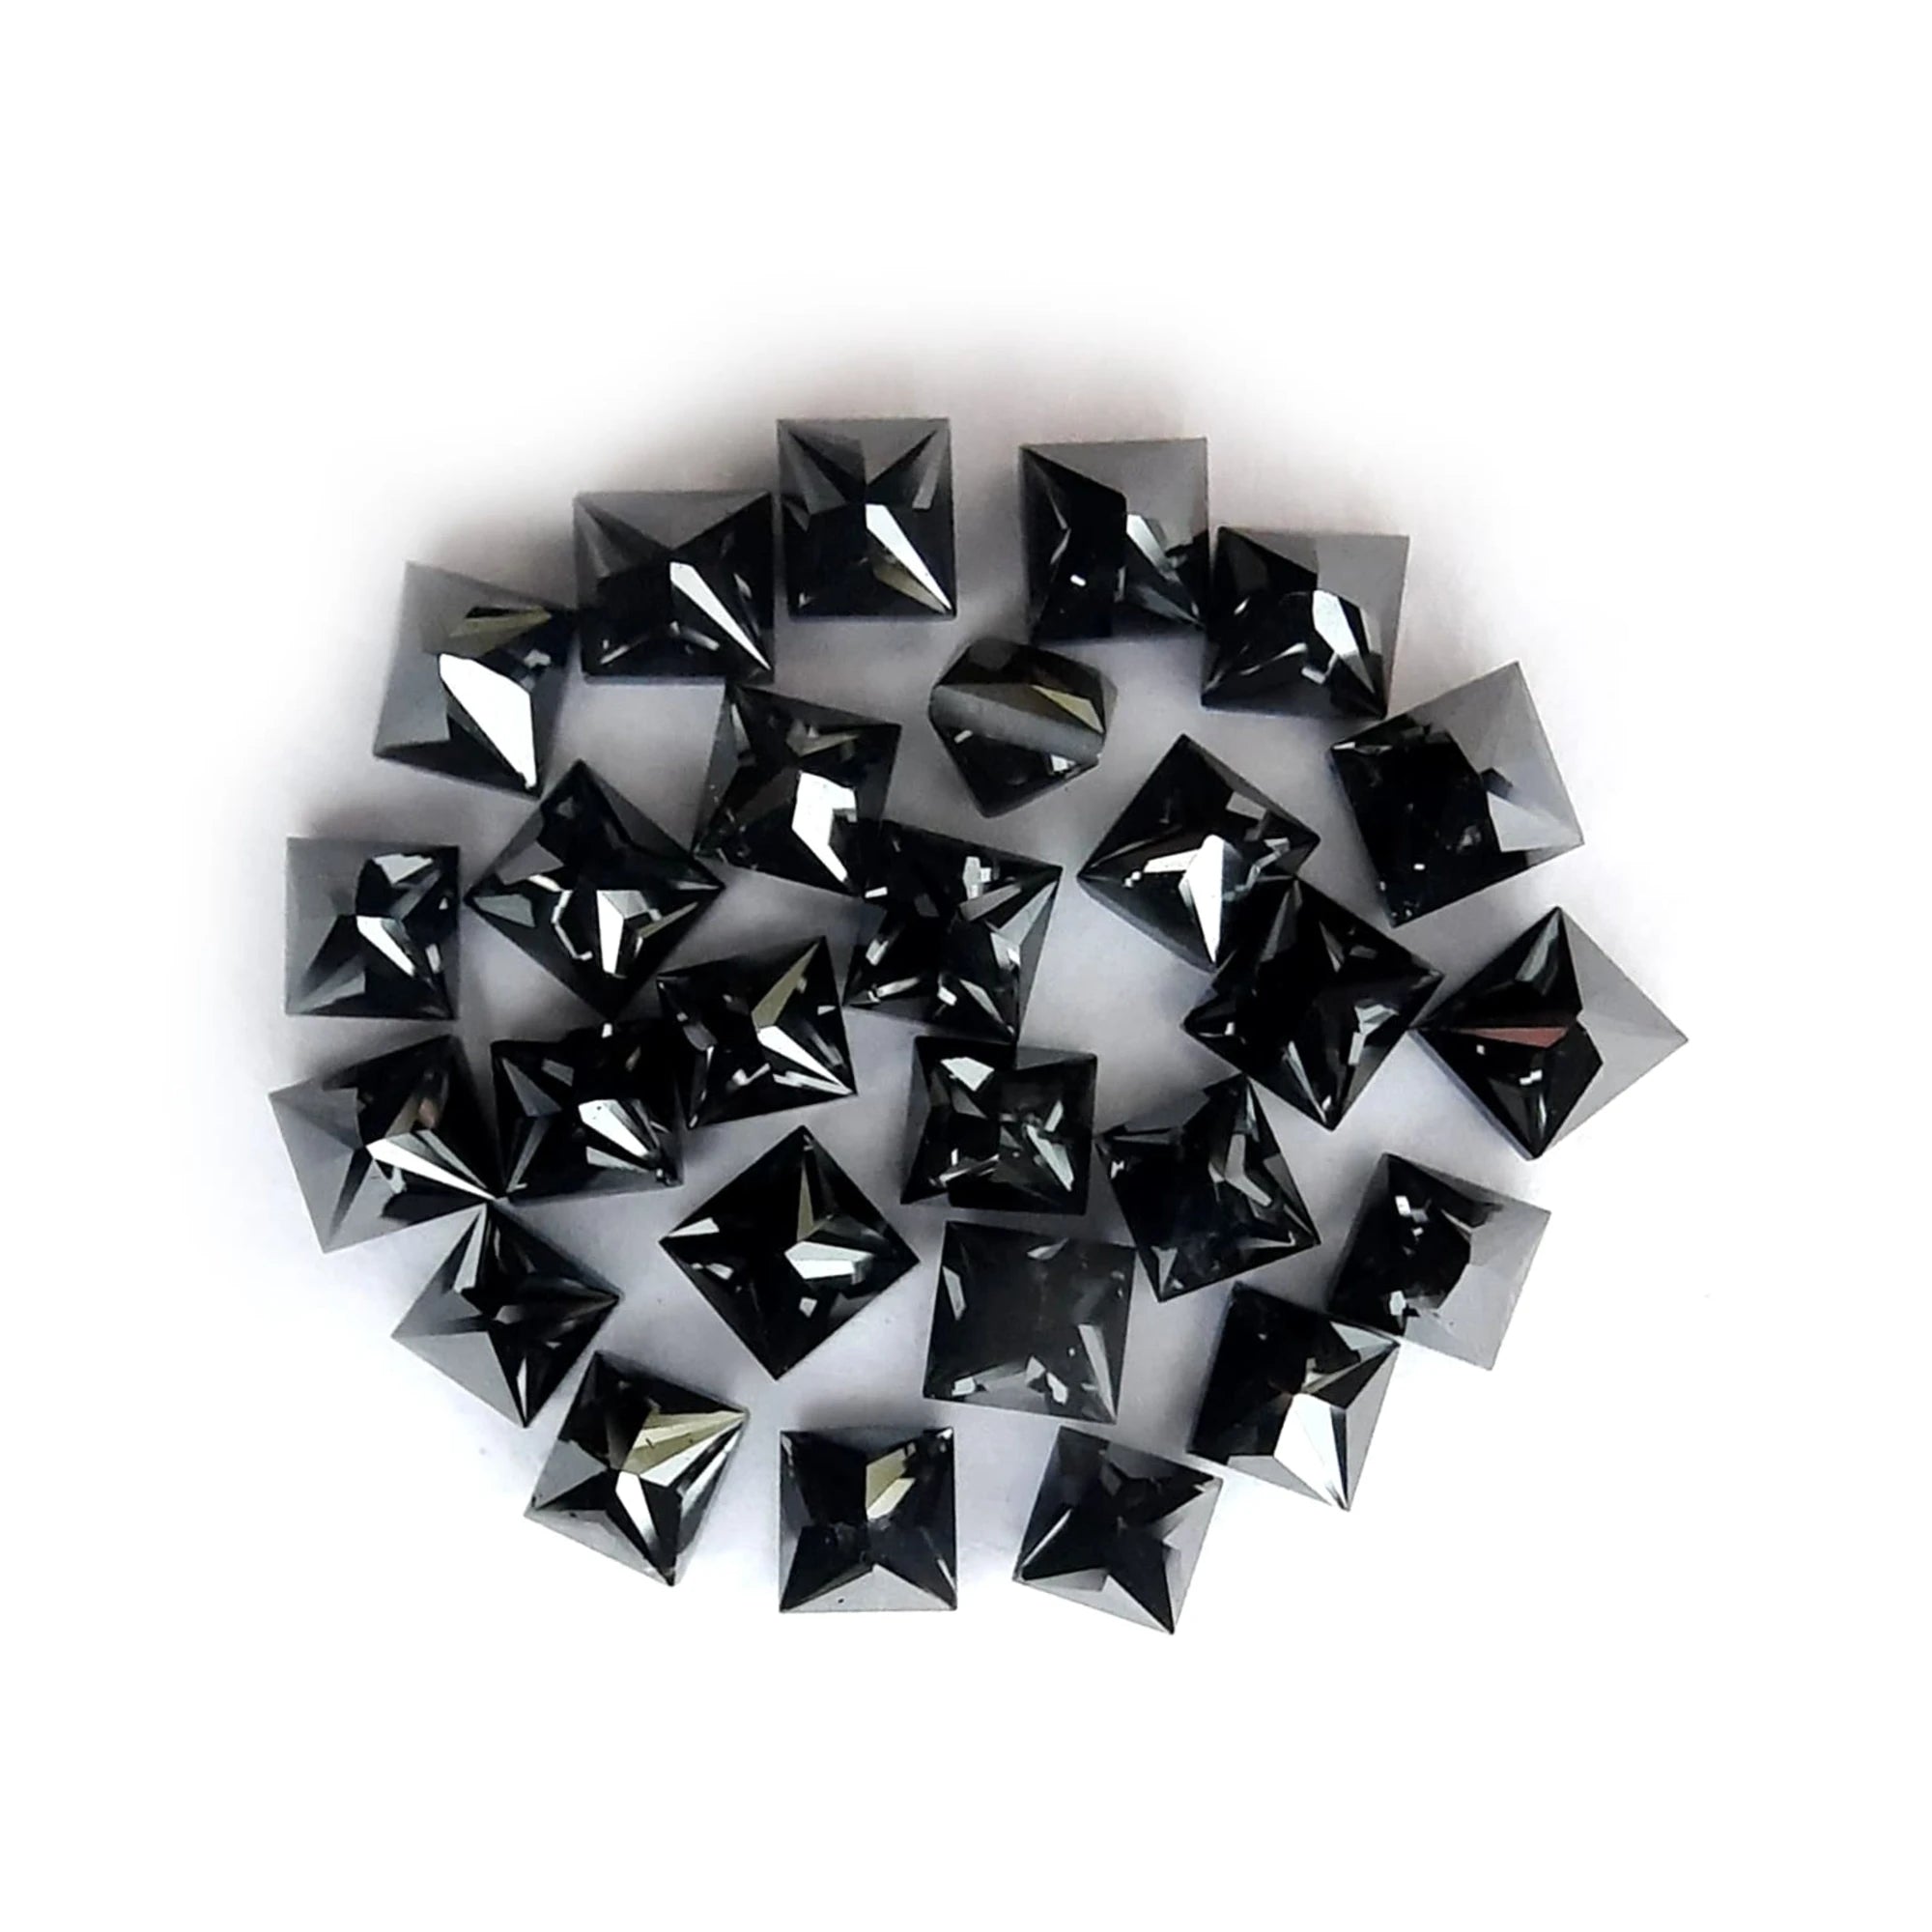 2.4 to 2.7 MM Black Loose Princess Cut Diamonds